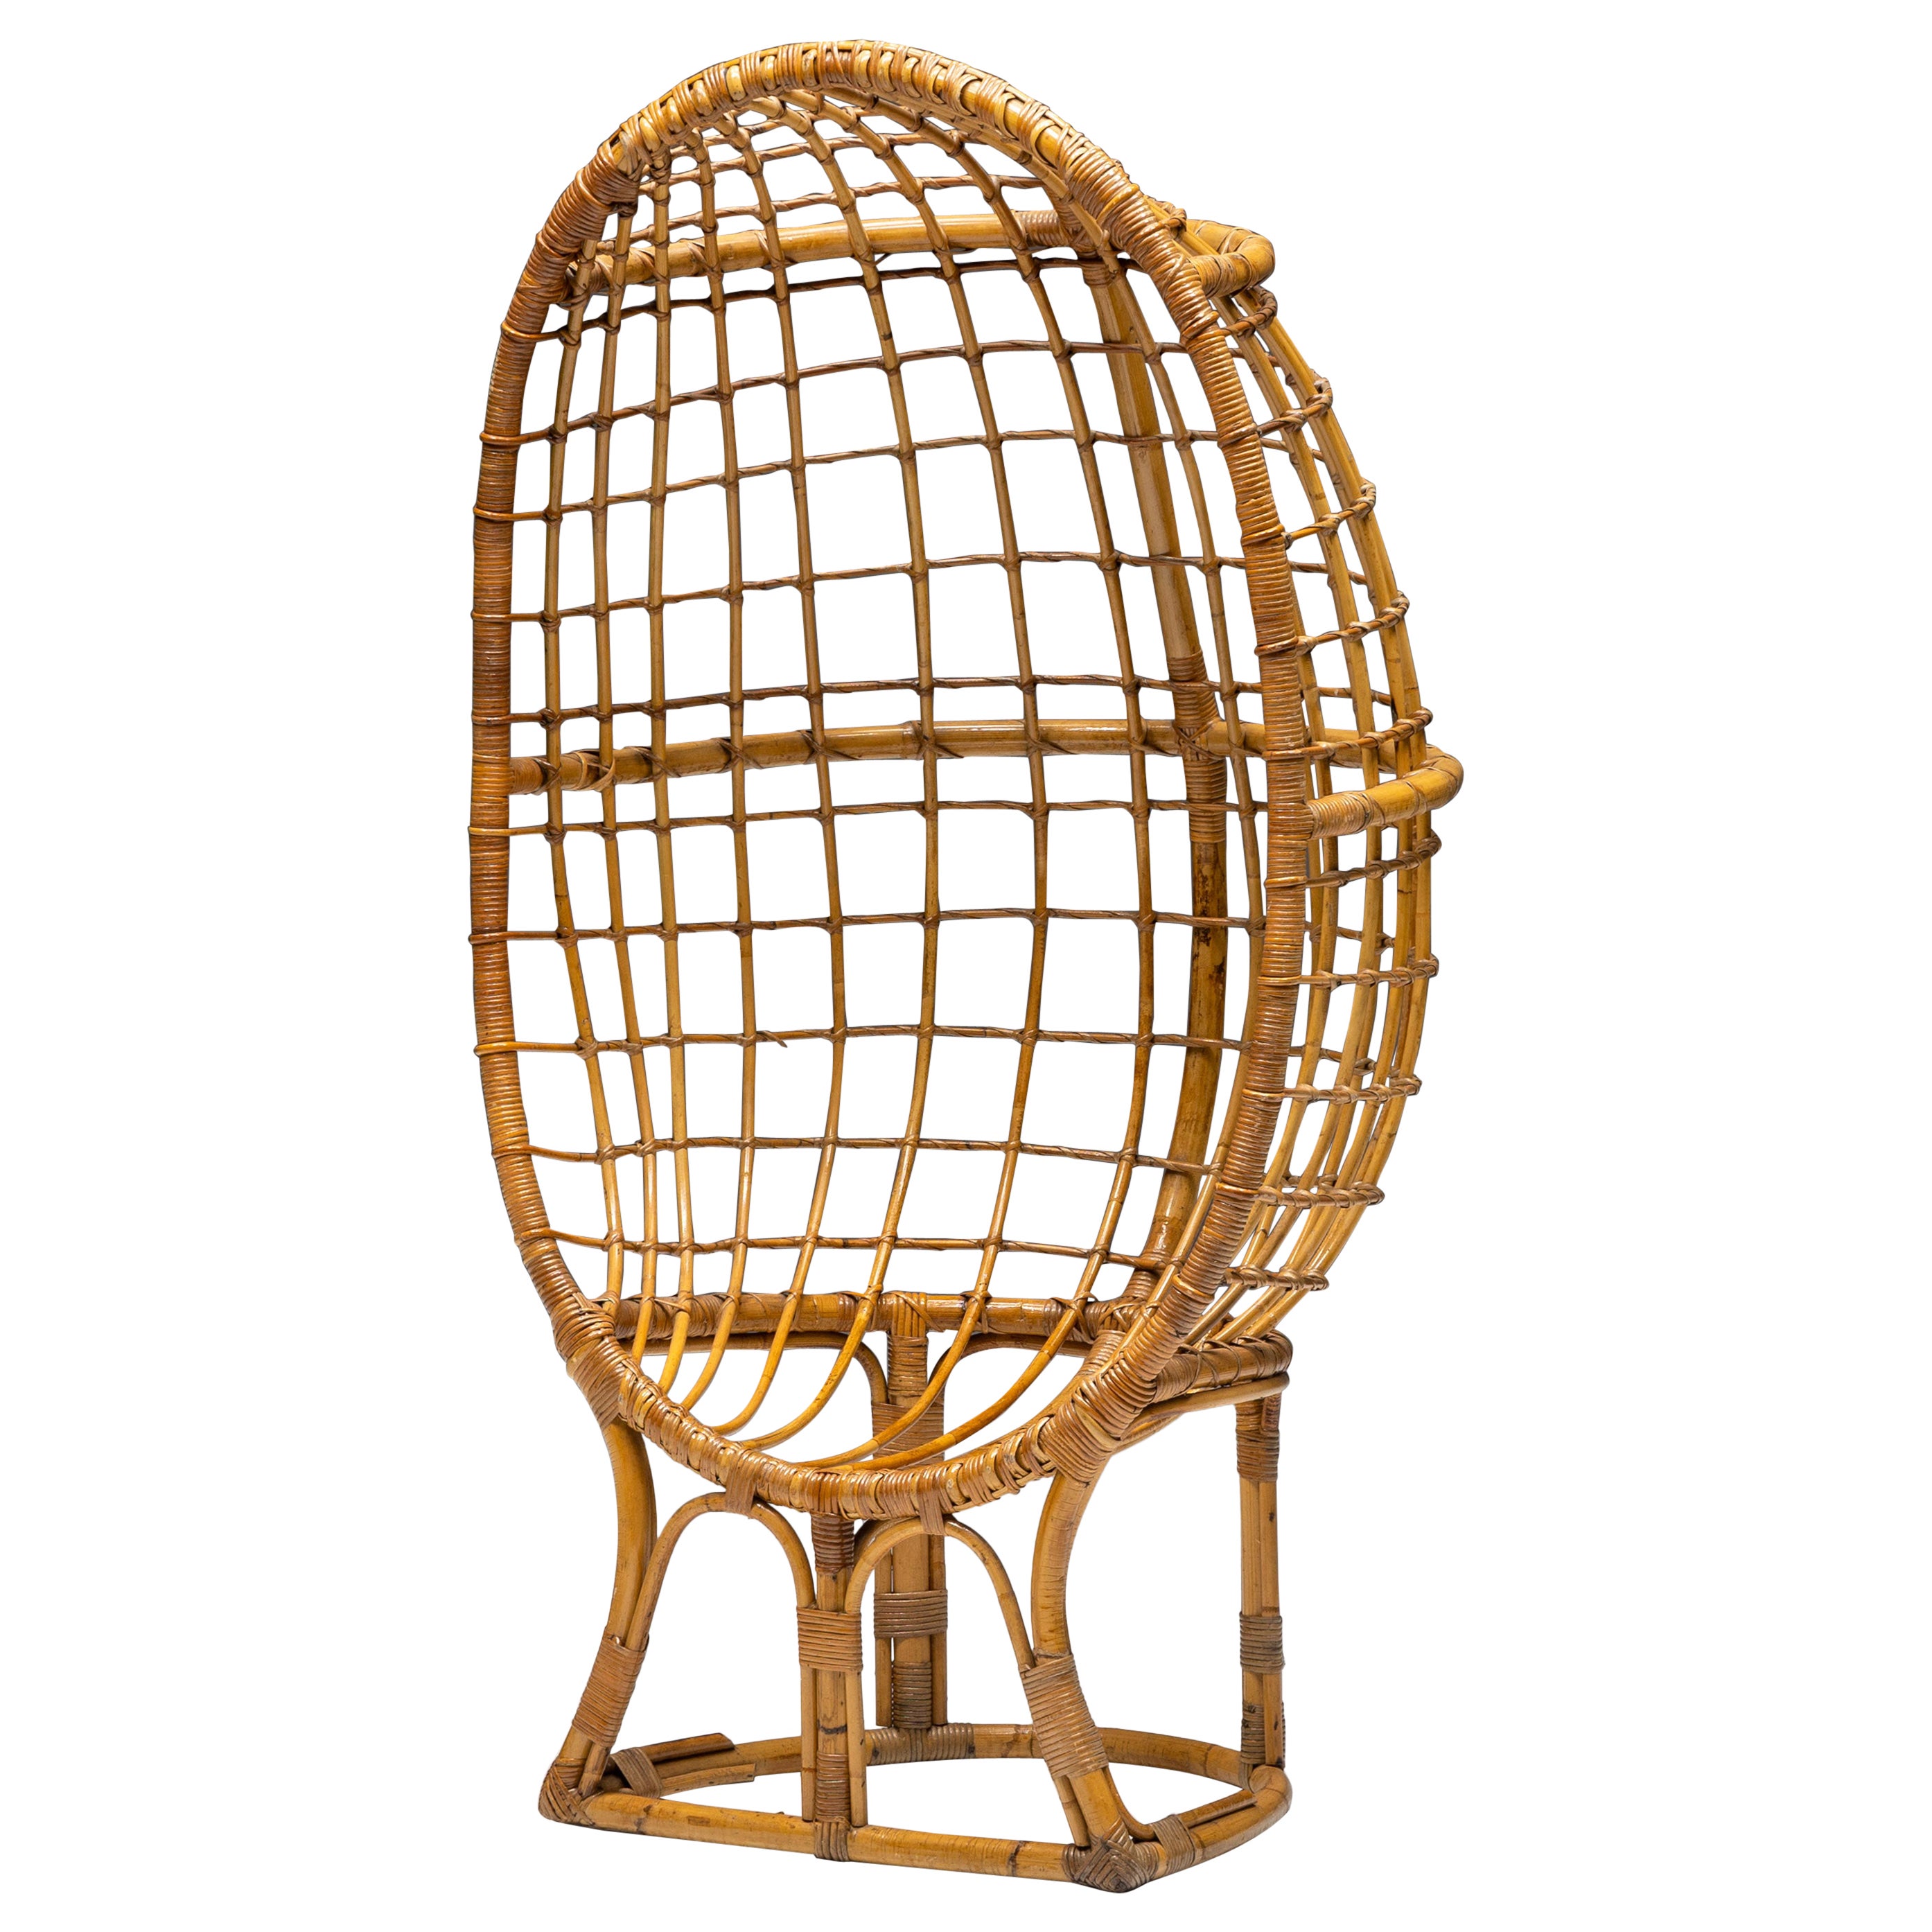 Mid-Century Bamboo Egg Chair, Italy, 1970s